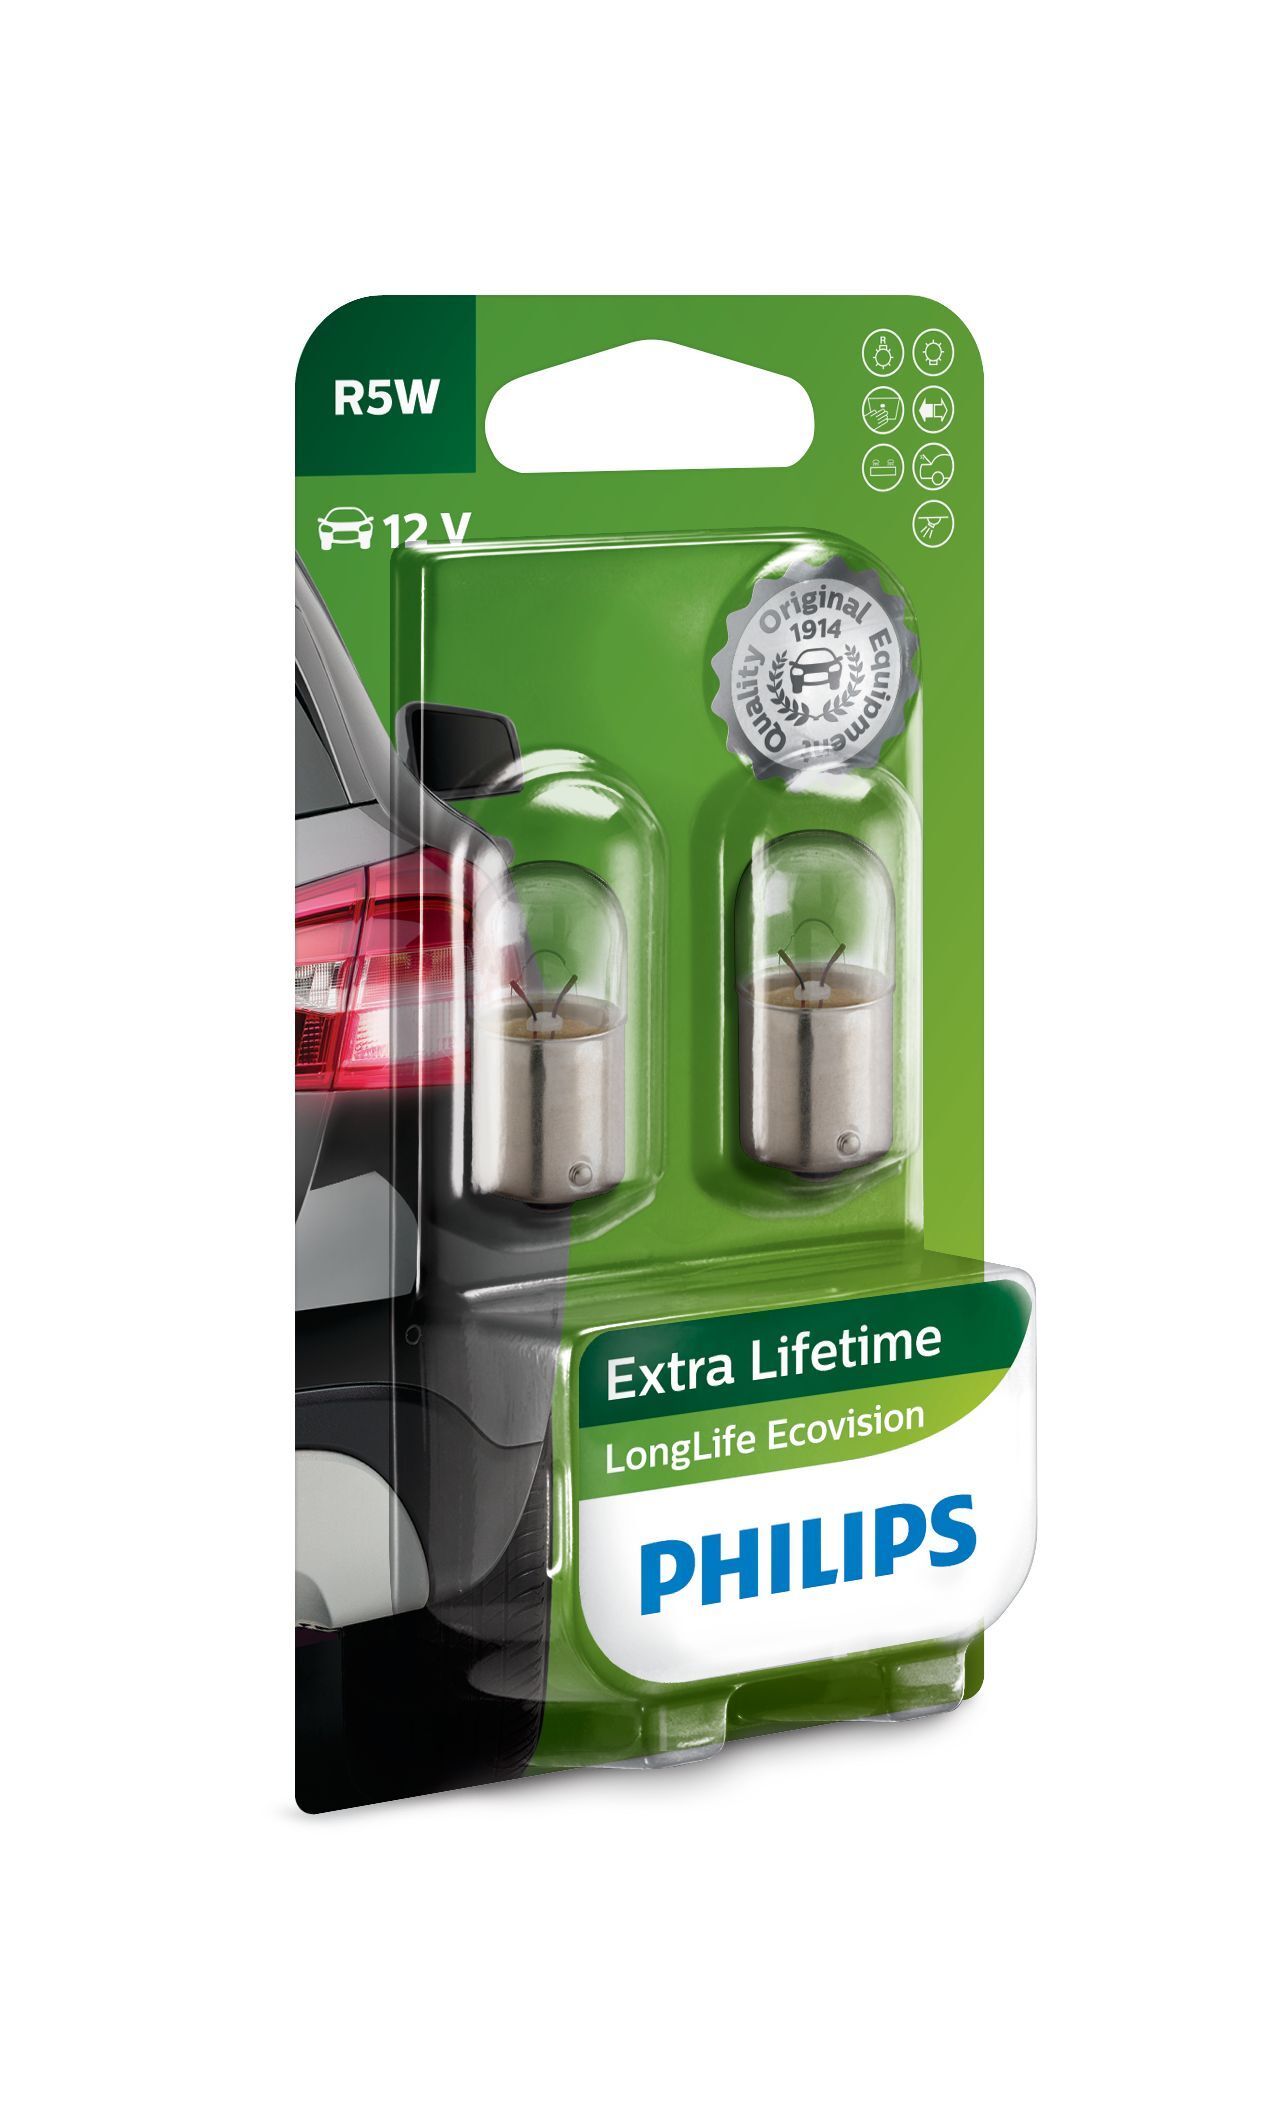 Philips LongLife EcoVision Conventionele binnenverlichting en signalering